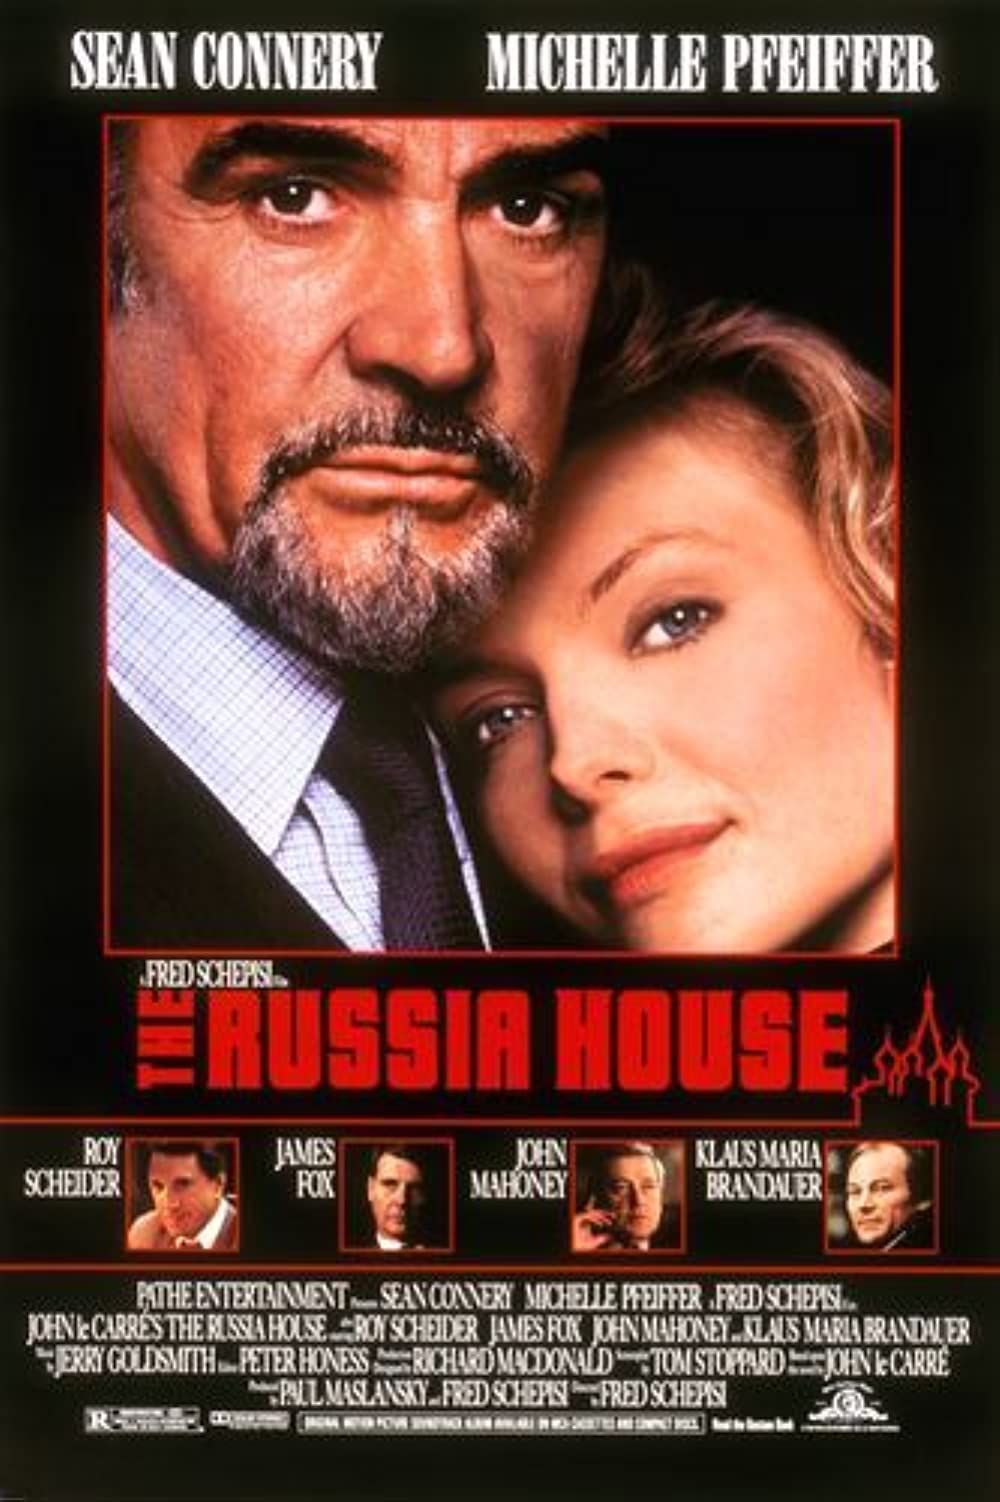 Filmbeschreibung zu The Russia House